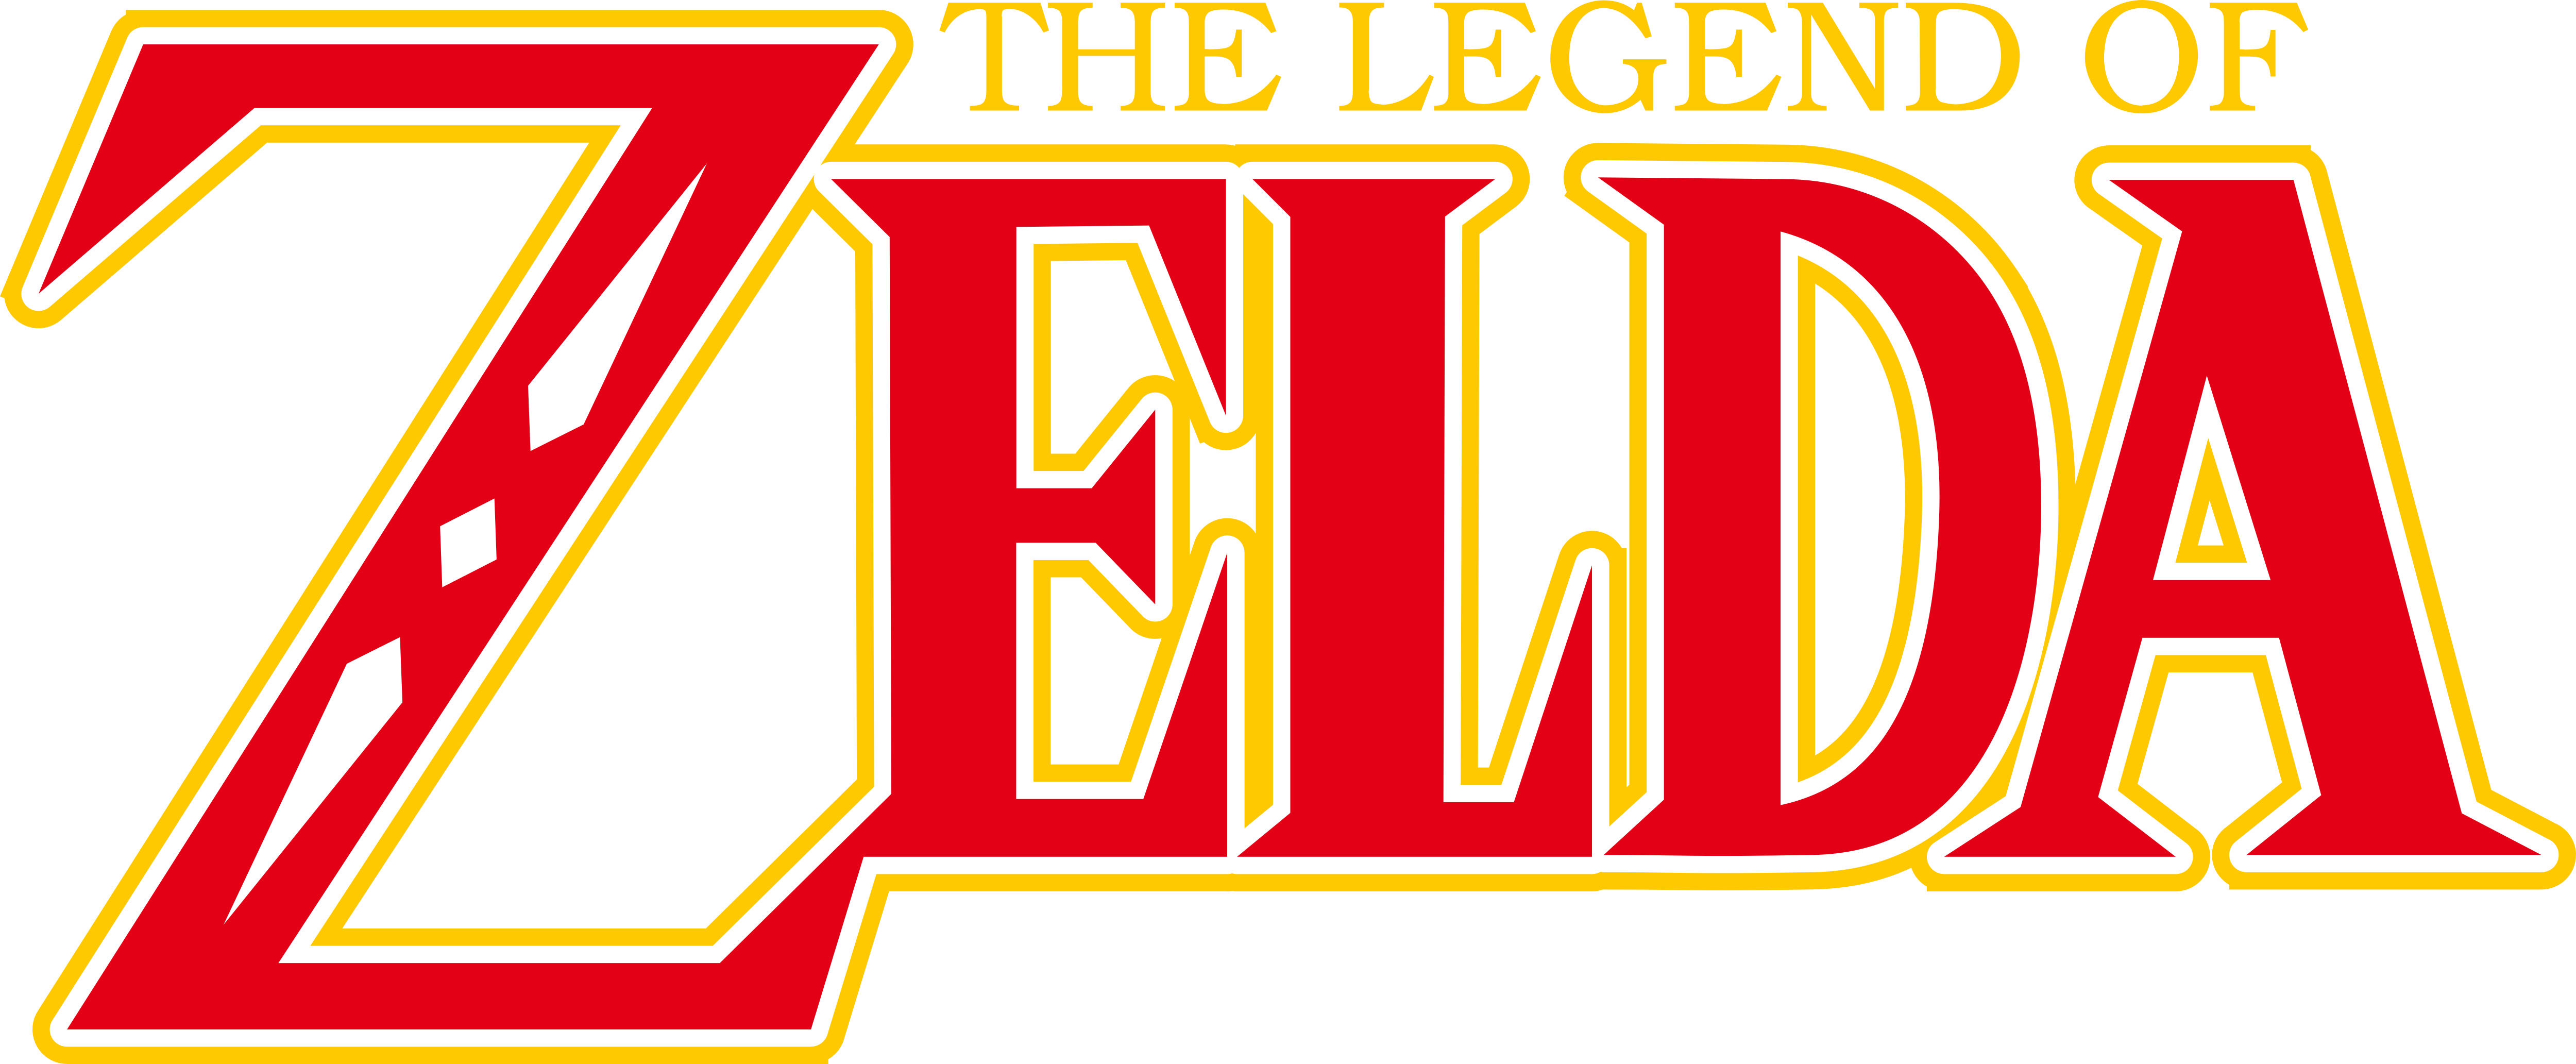 Minecraft the legend of zelda logo